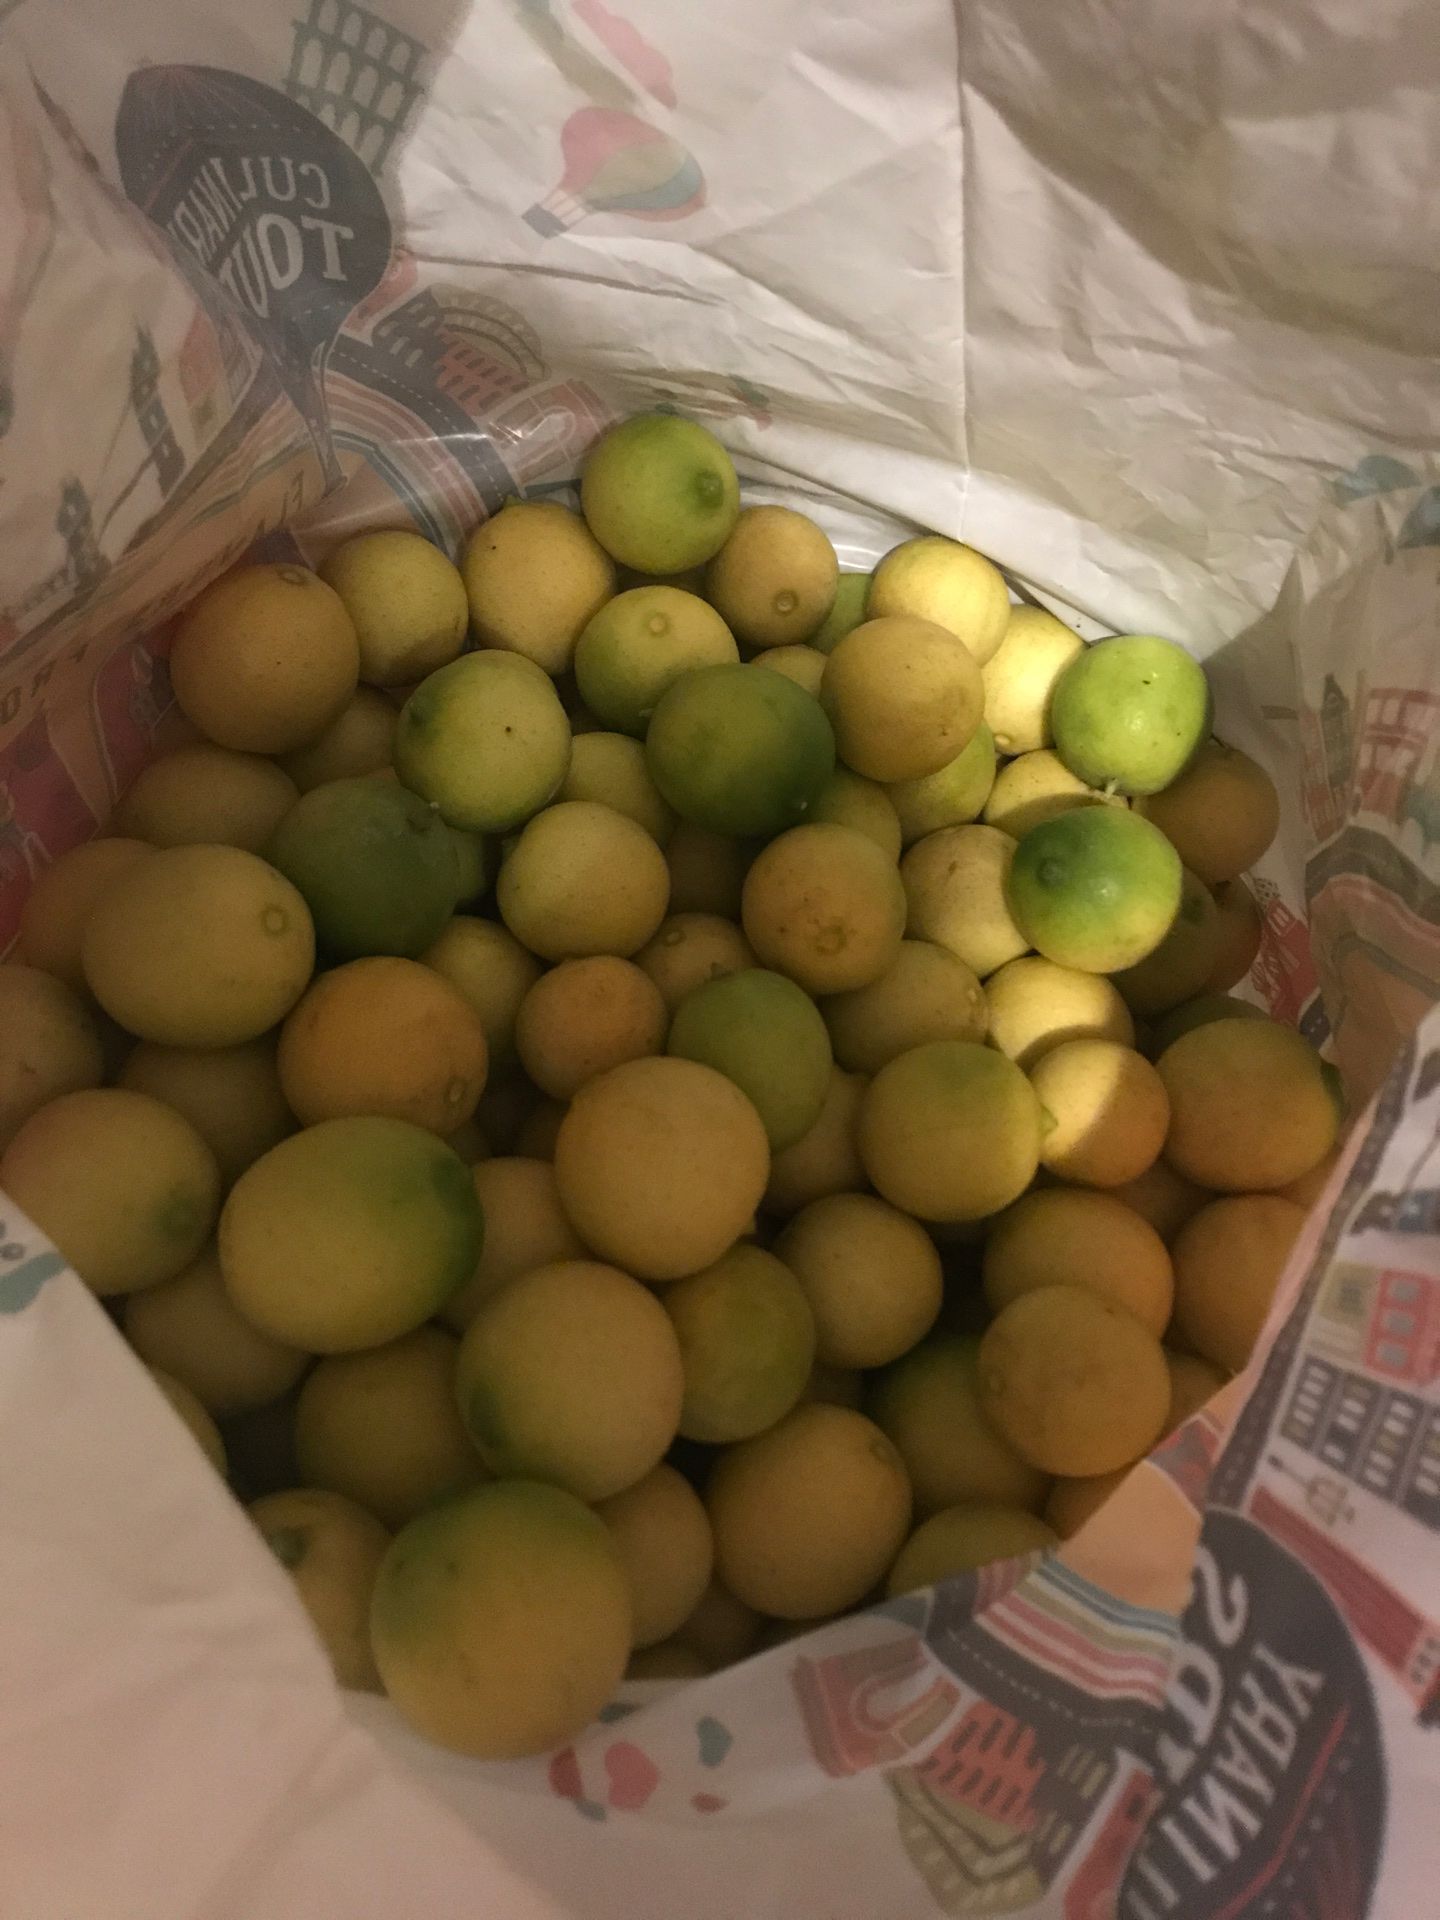 More than half of limes